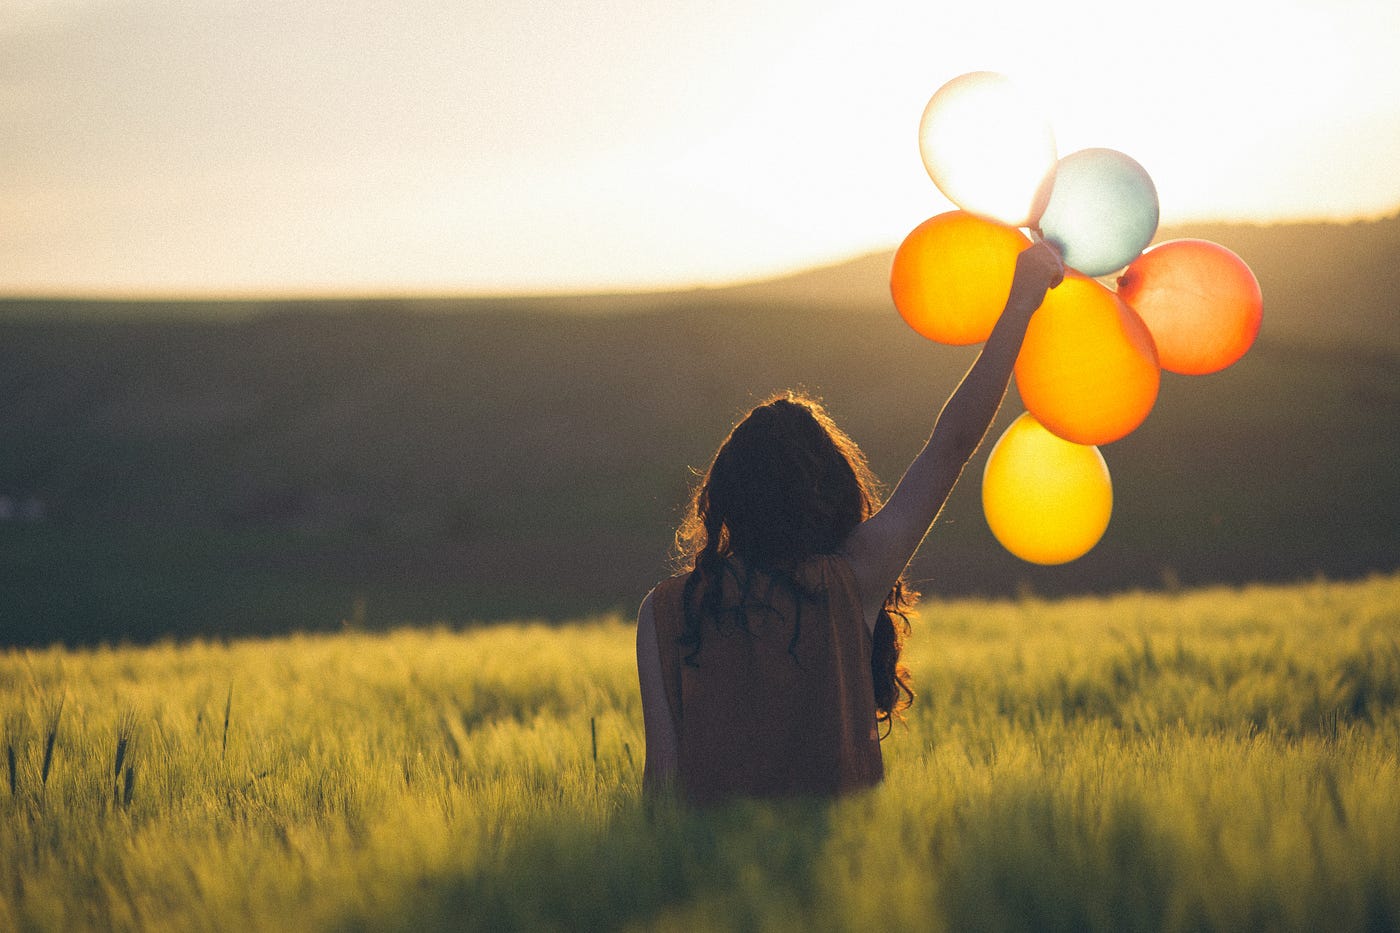 A girl holding a baloon